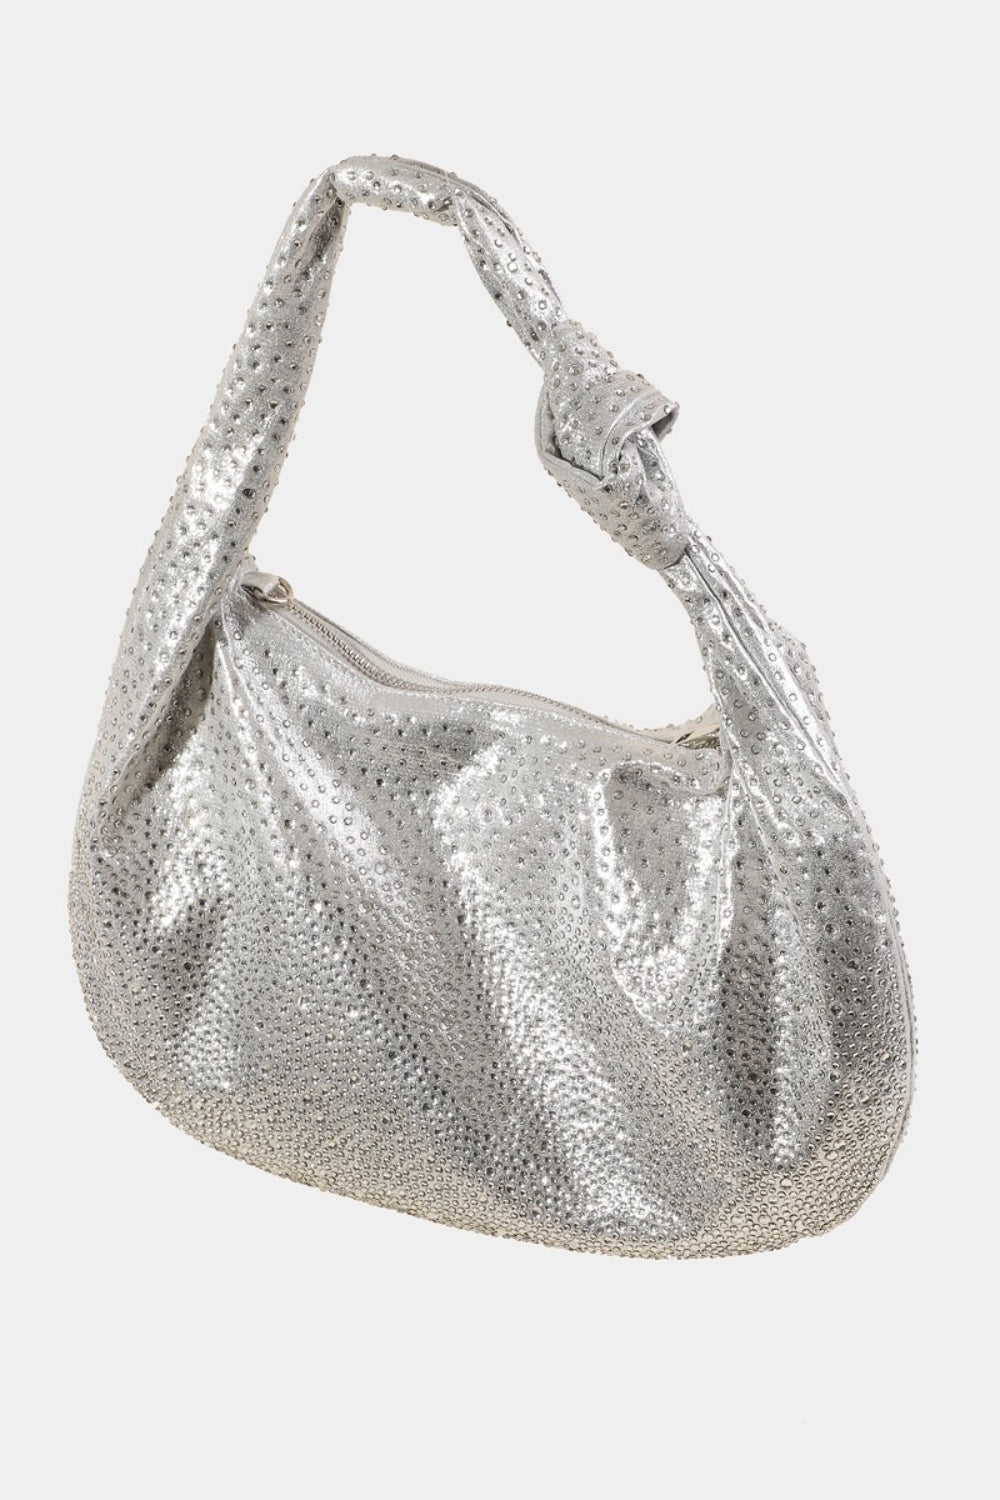 Fame Rhinestone Studded Handbag apparel & accessories